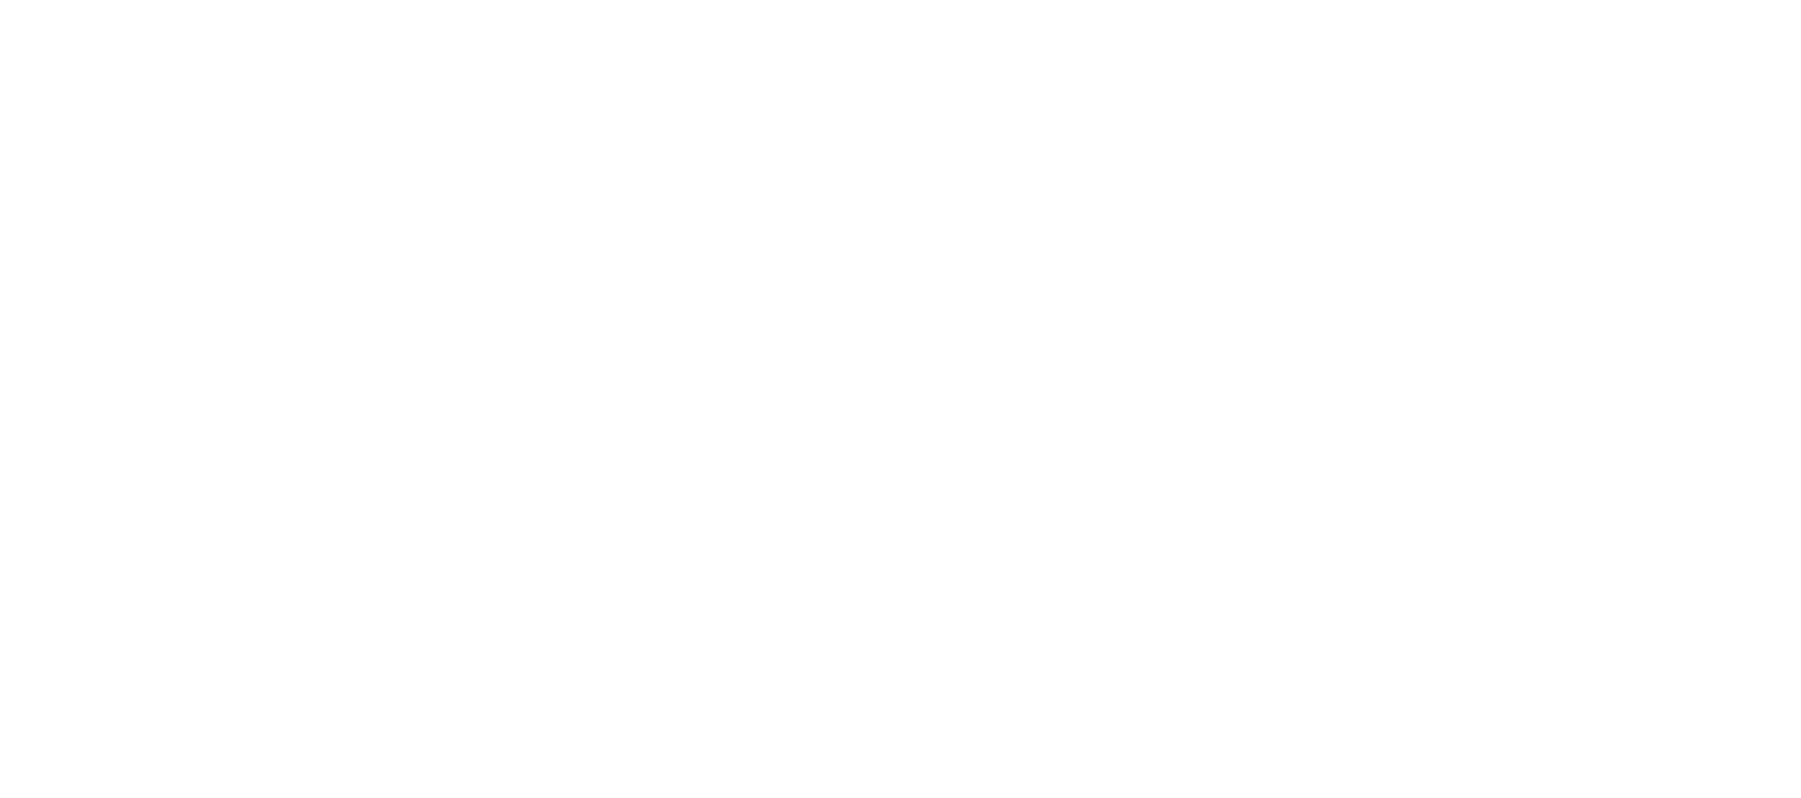 Epic Brand Logo - EPIC > Epic1 Team > Epic1 Logos and Templates